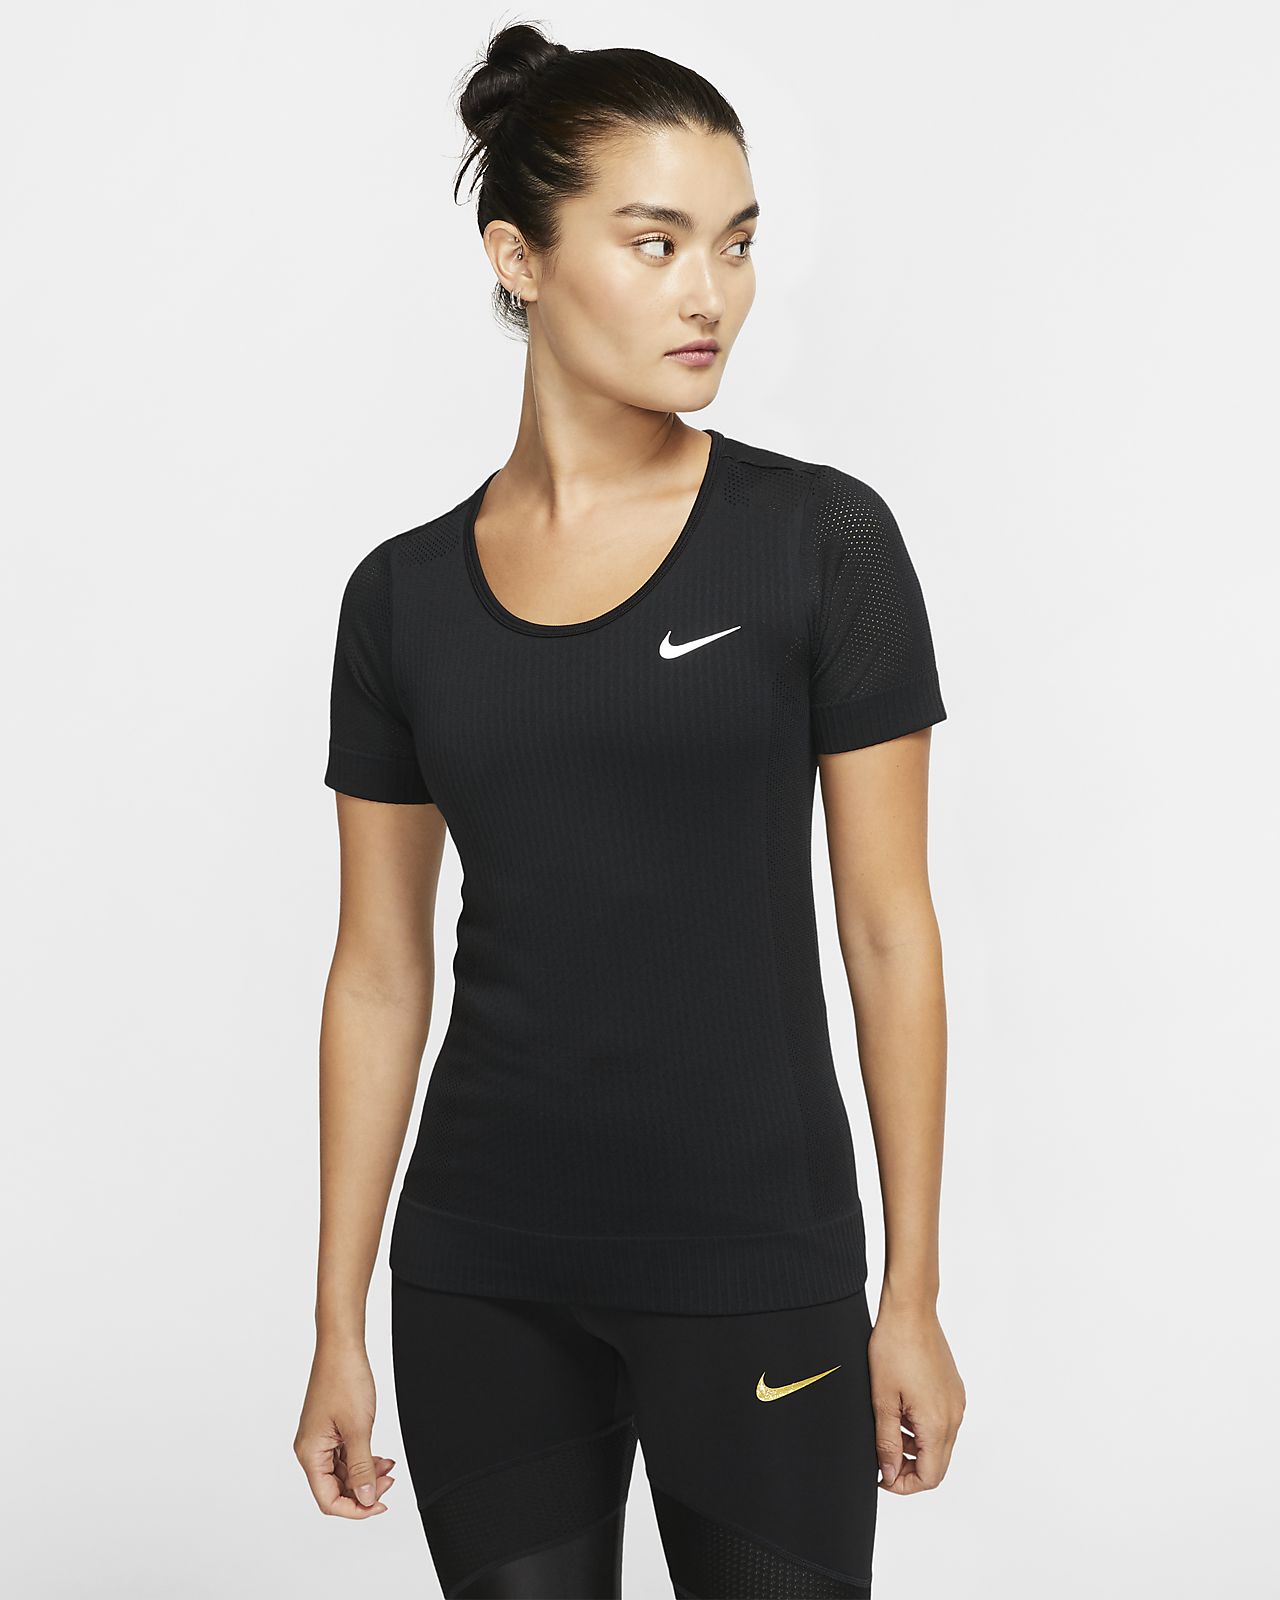 Short-Sleeve Running Top. Nike CH